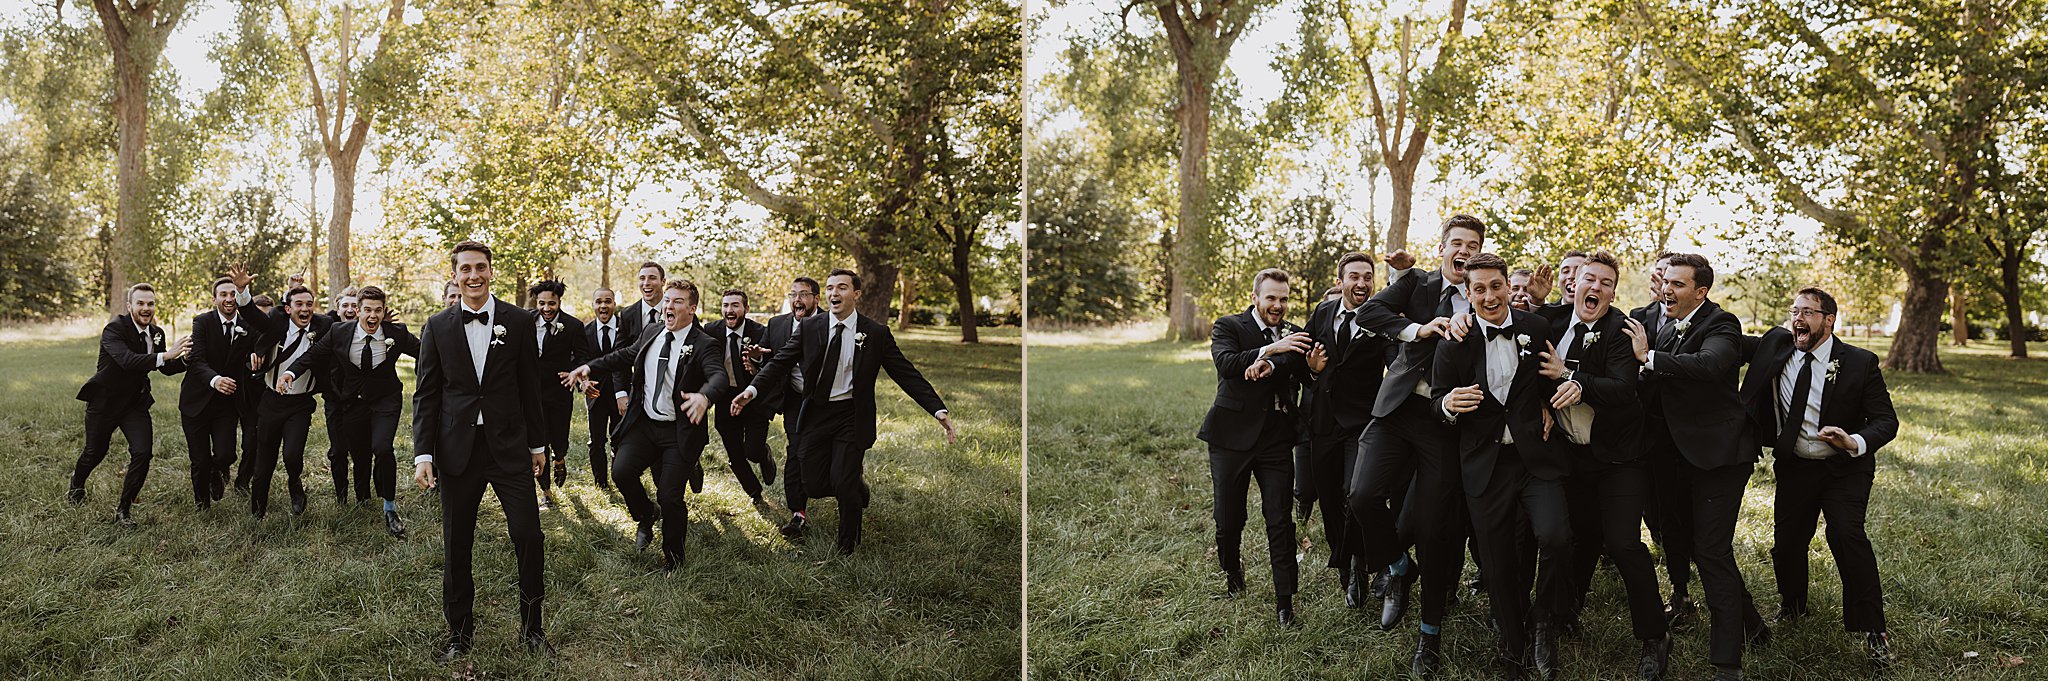 St. Louis Wedding Photographer | Forest Park Photos